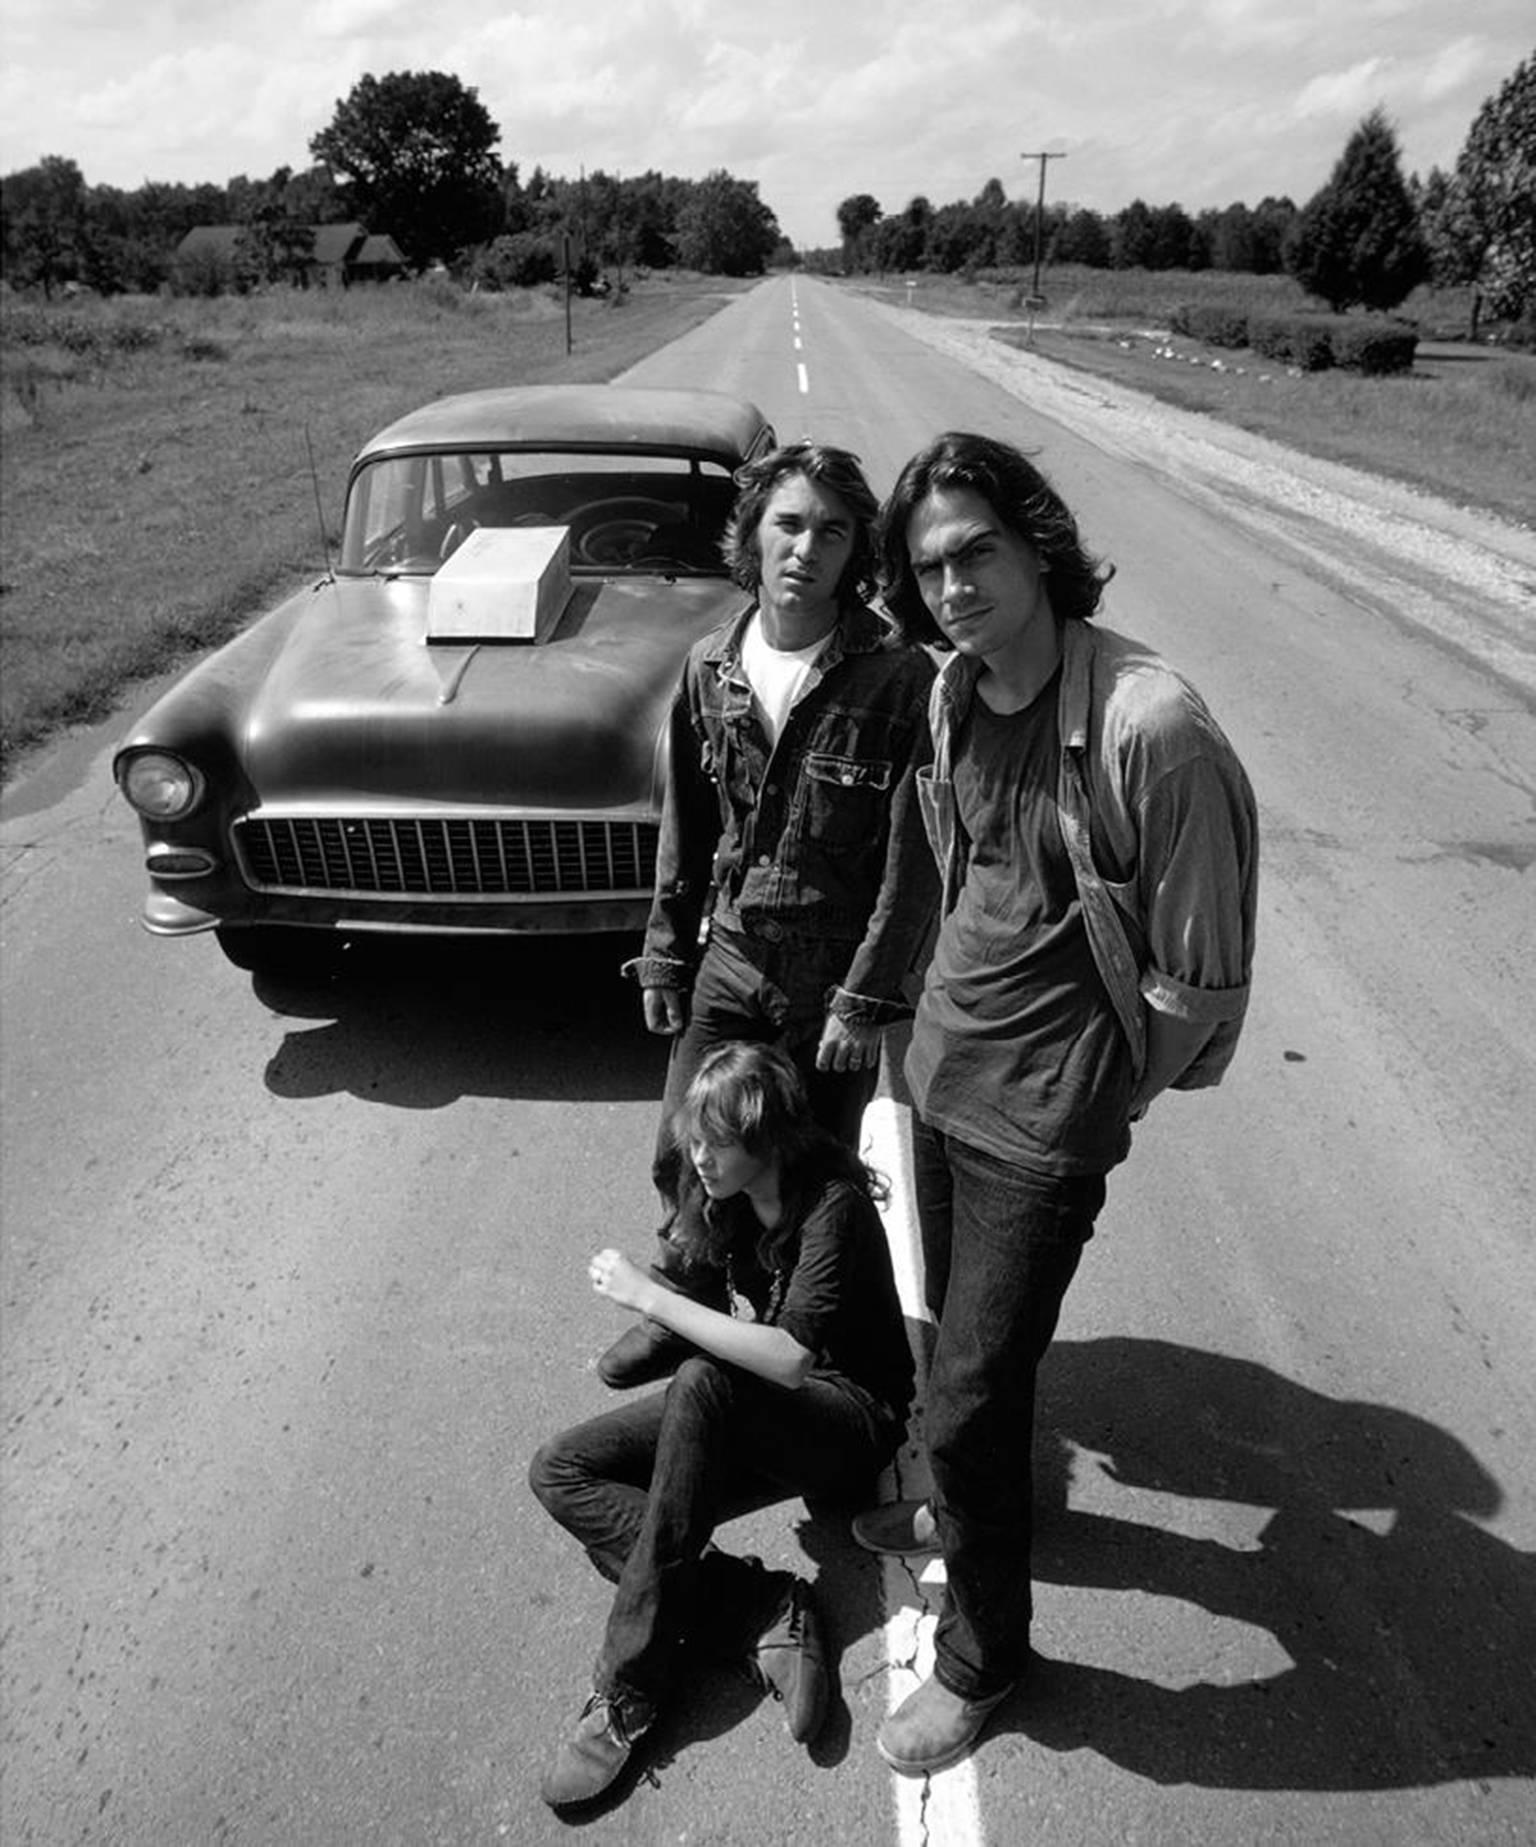 John R. Hamilton Black and White Photograph - James Taylor, Dennis Wilson and Laurie Bird, “Two-Lane Blacktop, ” 1971